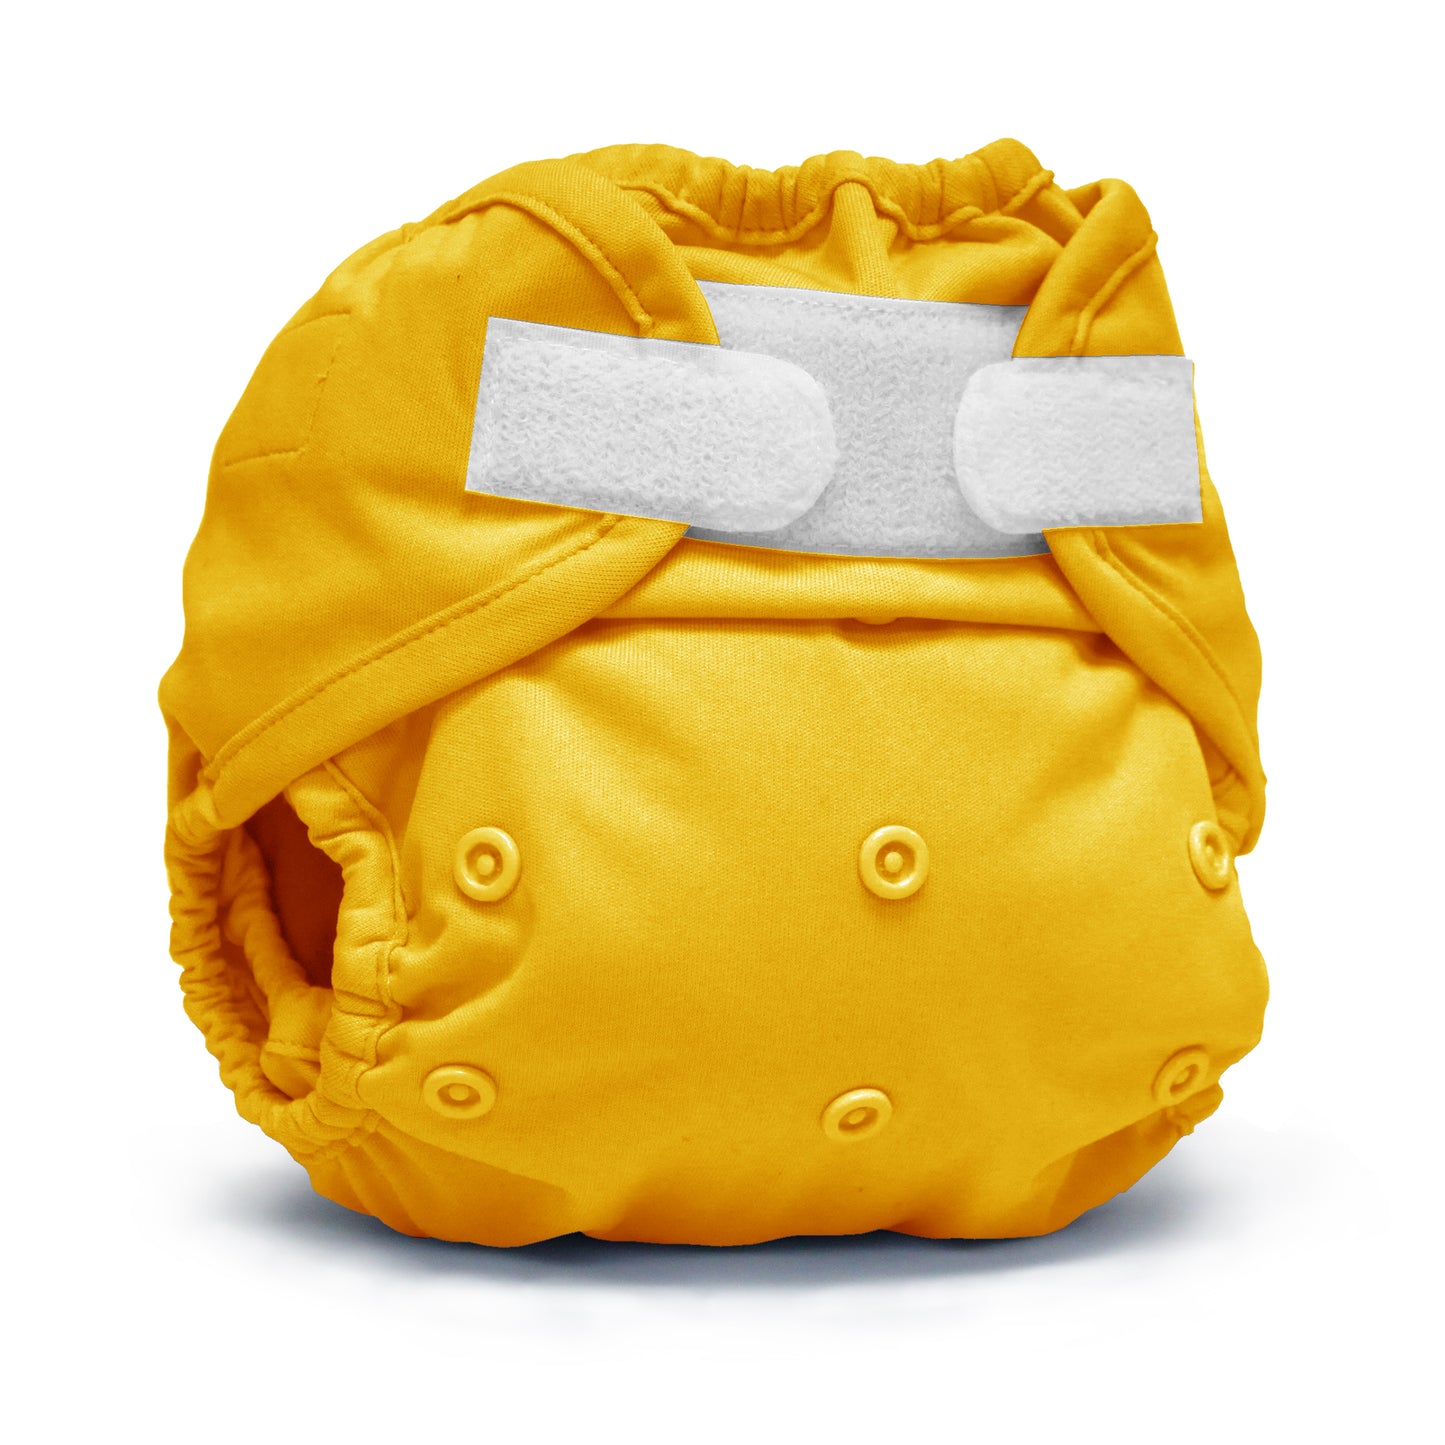 Rumparooz - One Size Cloth Diaper Covers